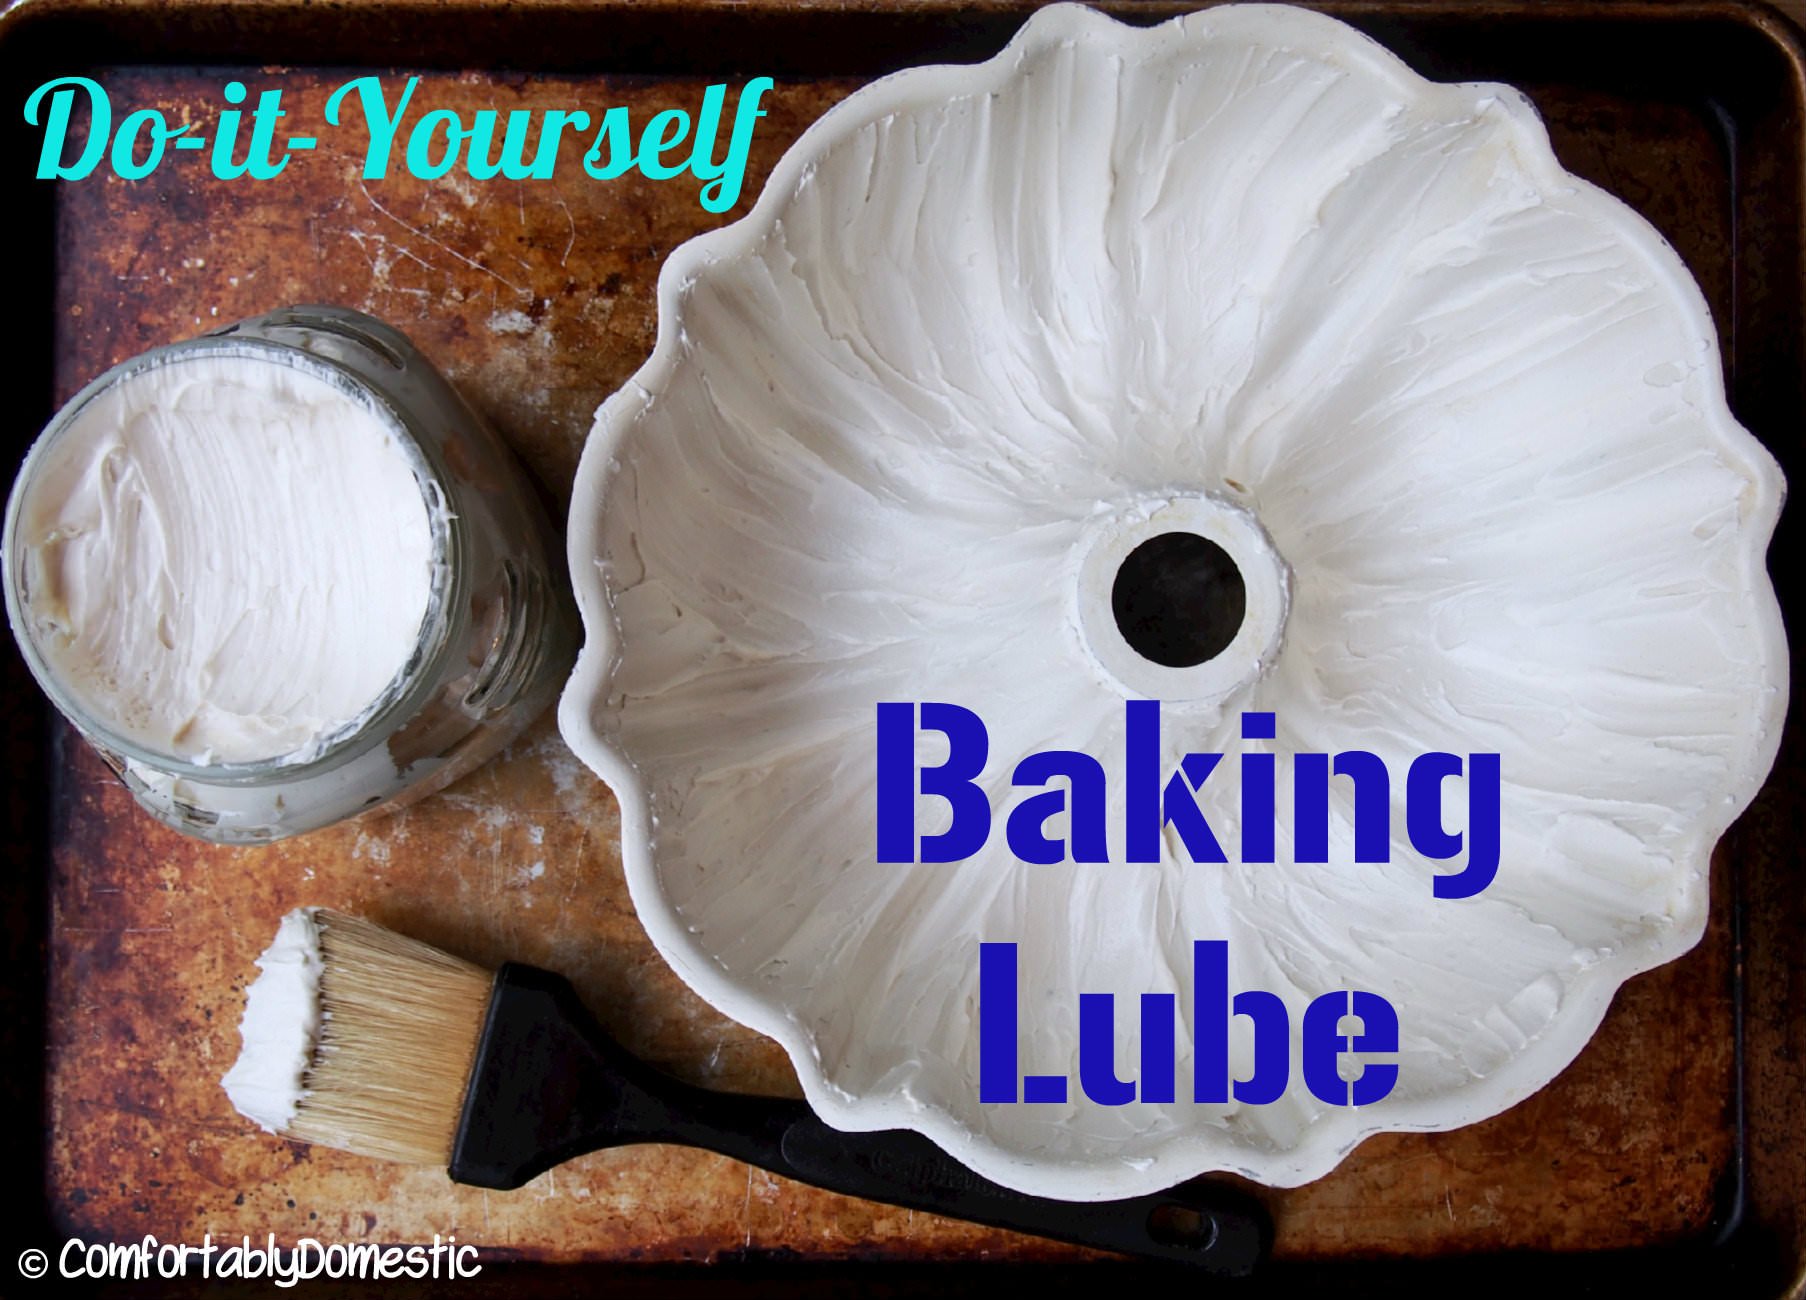 Do-it-Yourself Baking Lube via ComfortablyDomestic.com